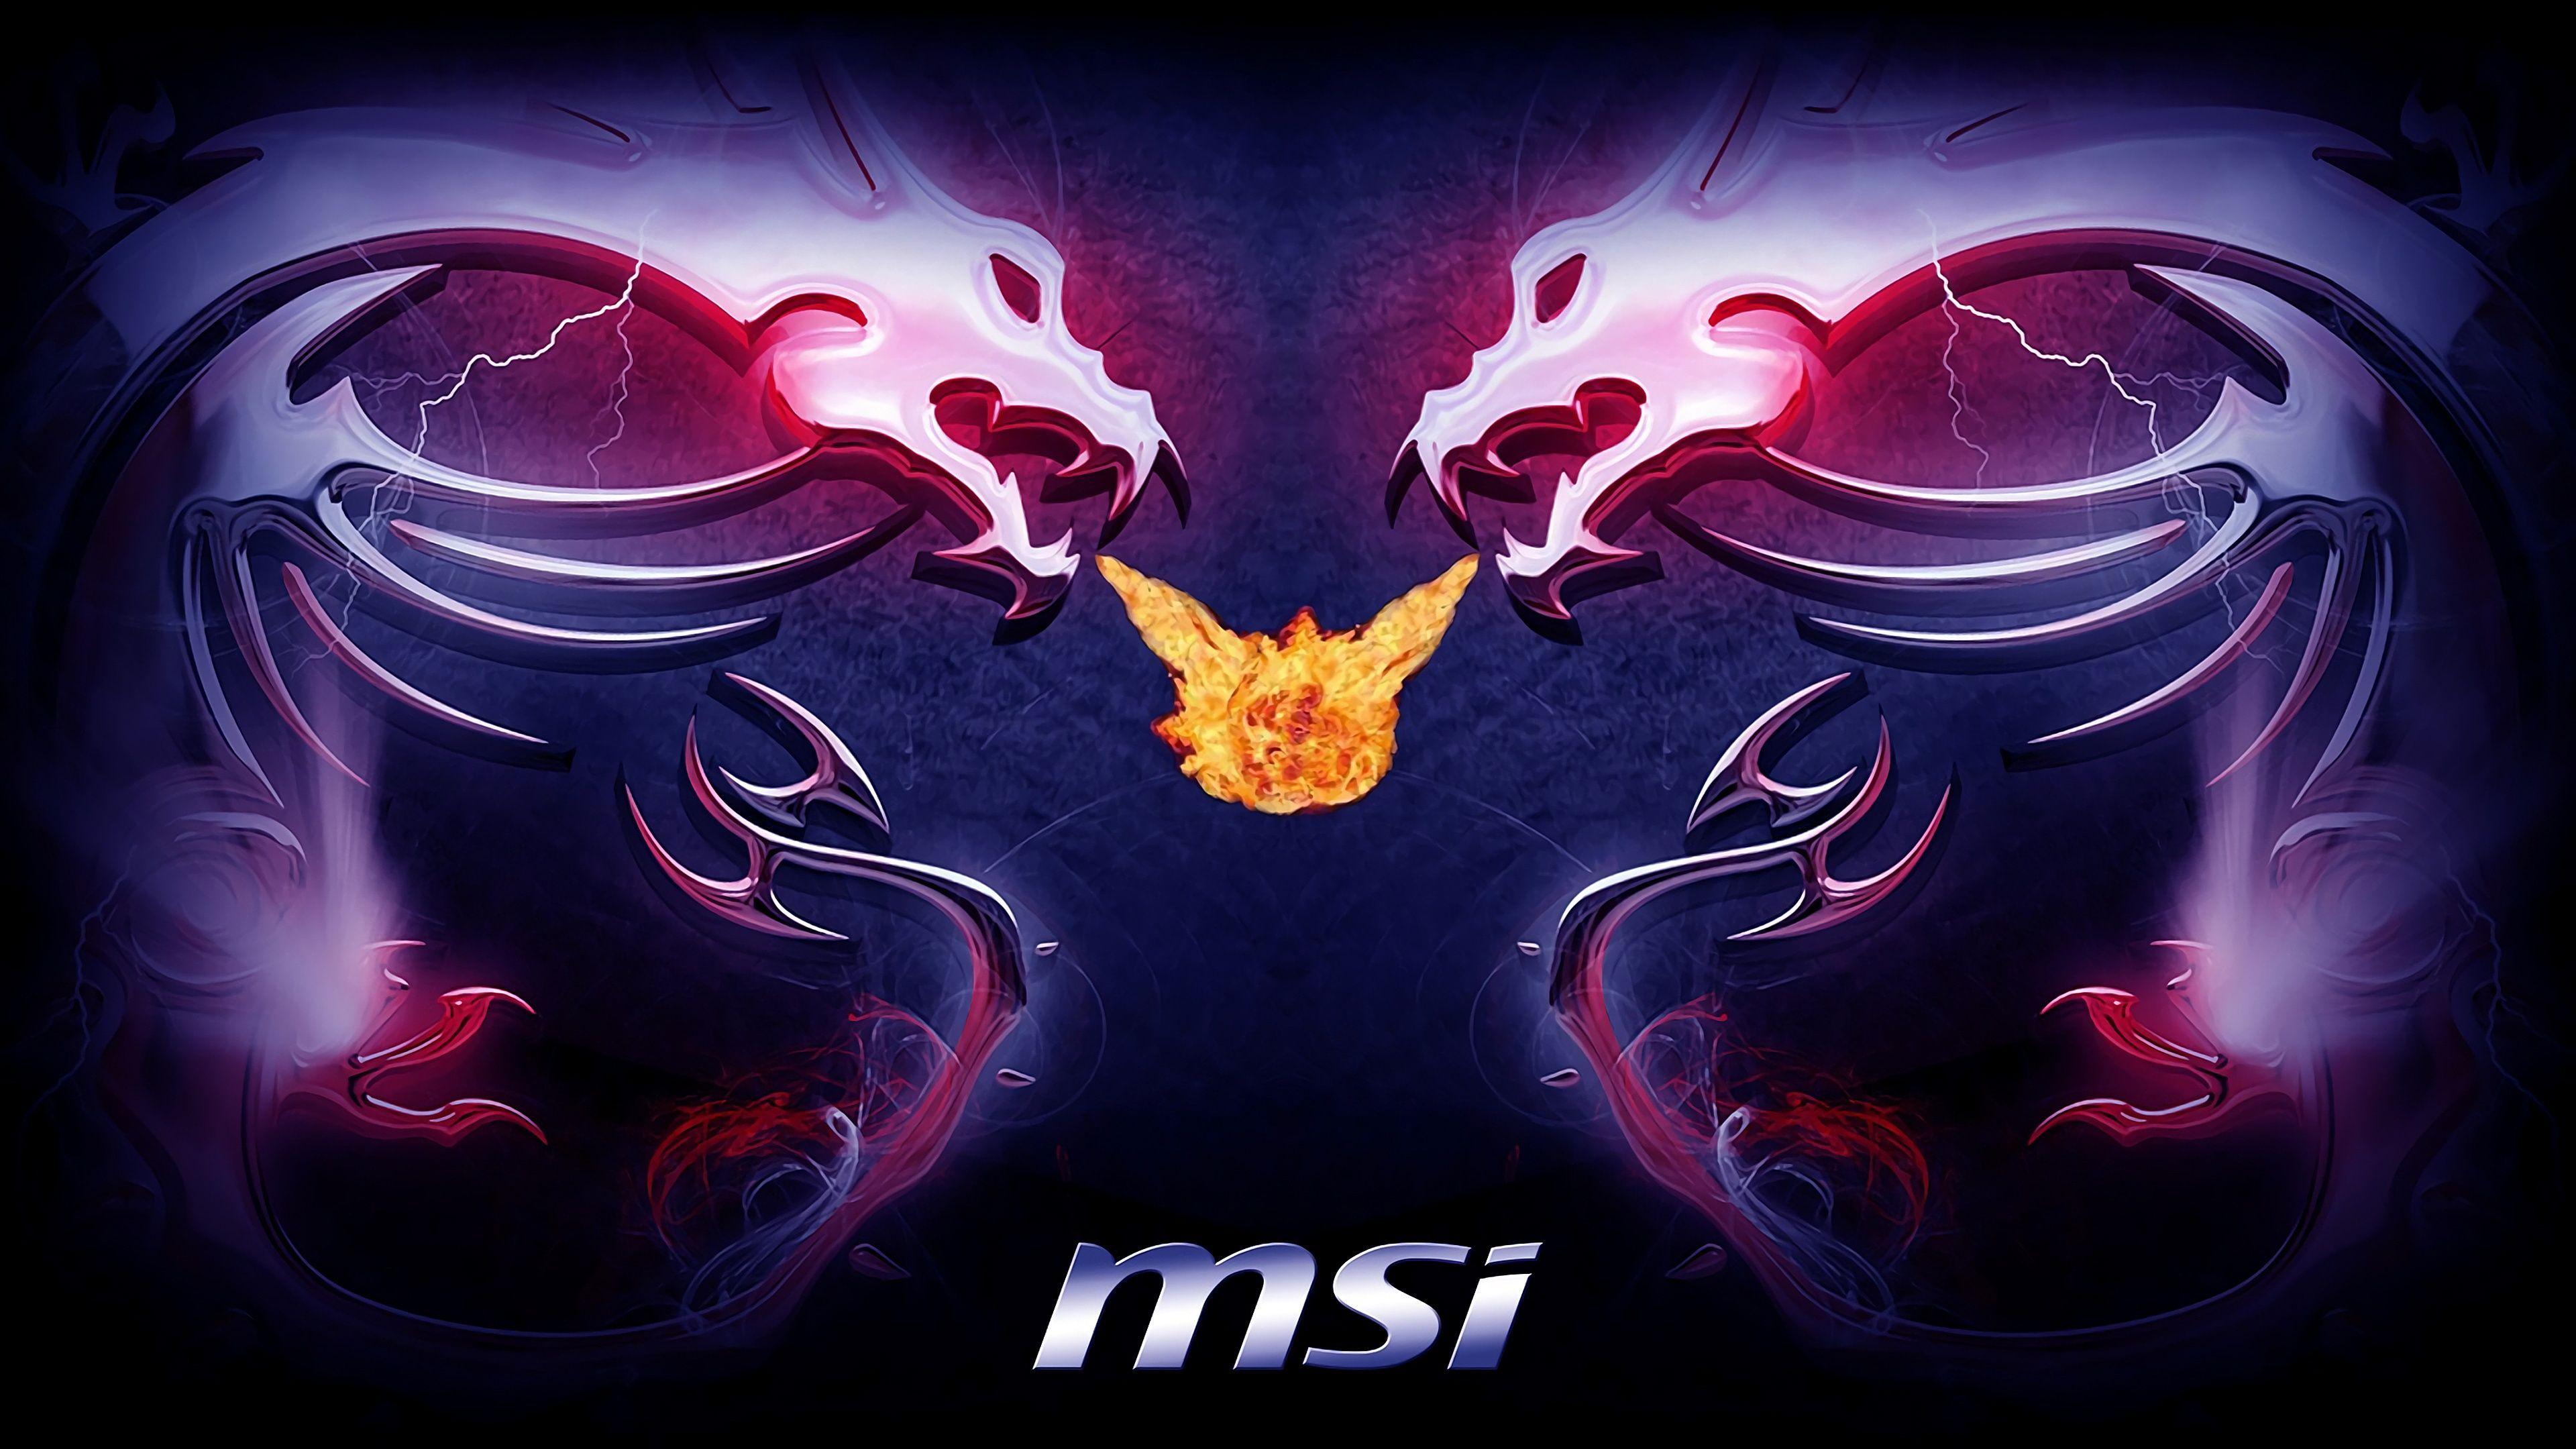 Msi logo hd wallpaper